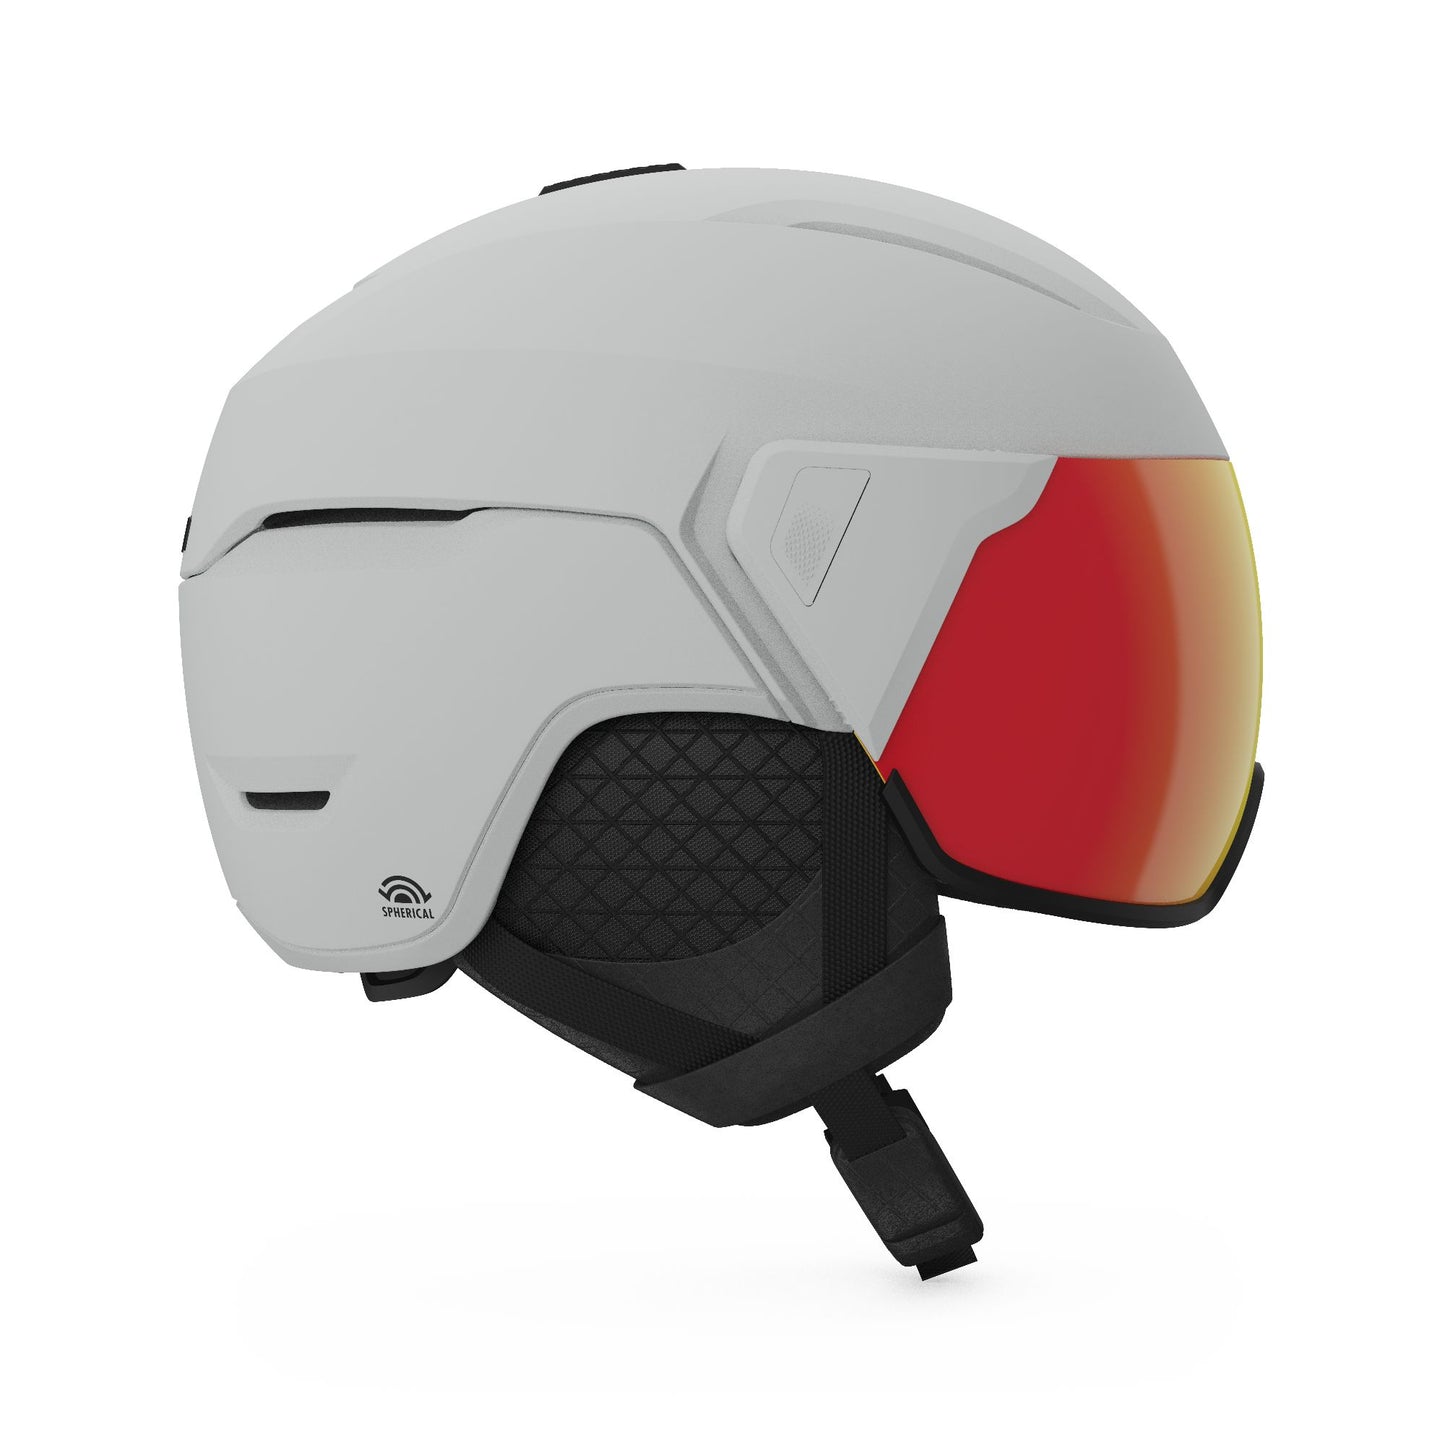 Giro Orbit Spherical Helmet Matte Light Grey Snow Helmets